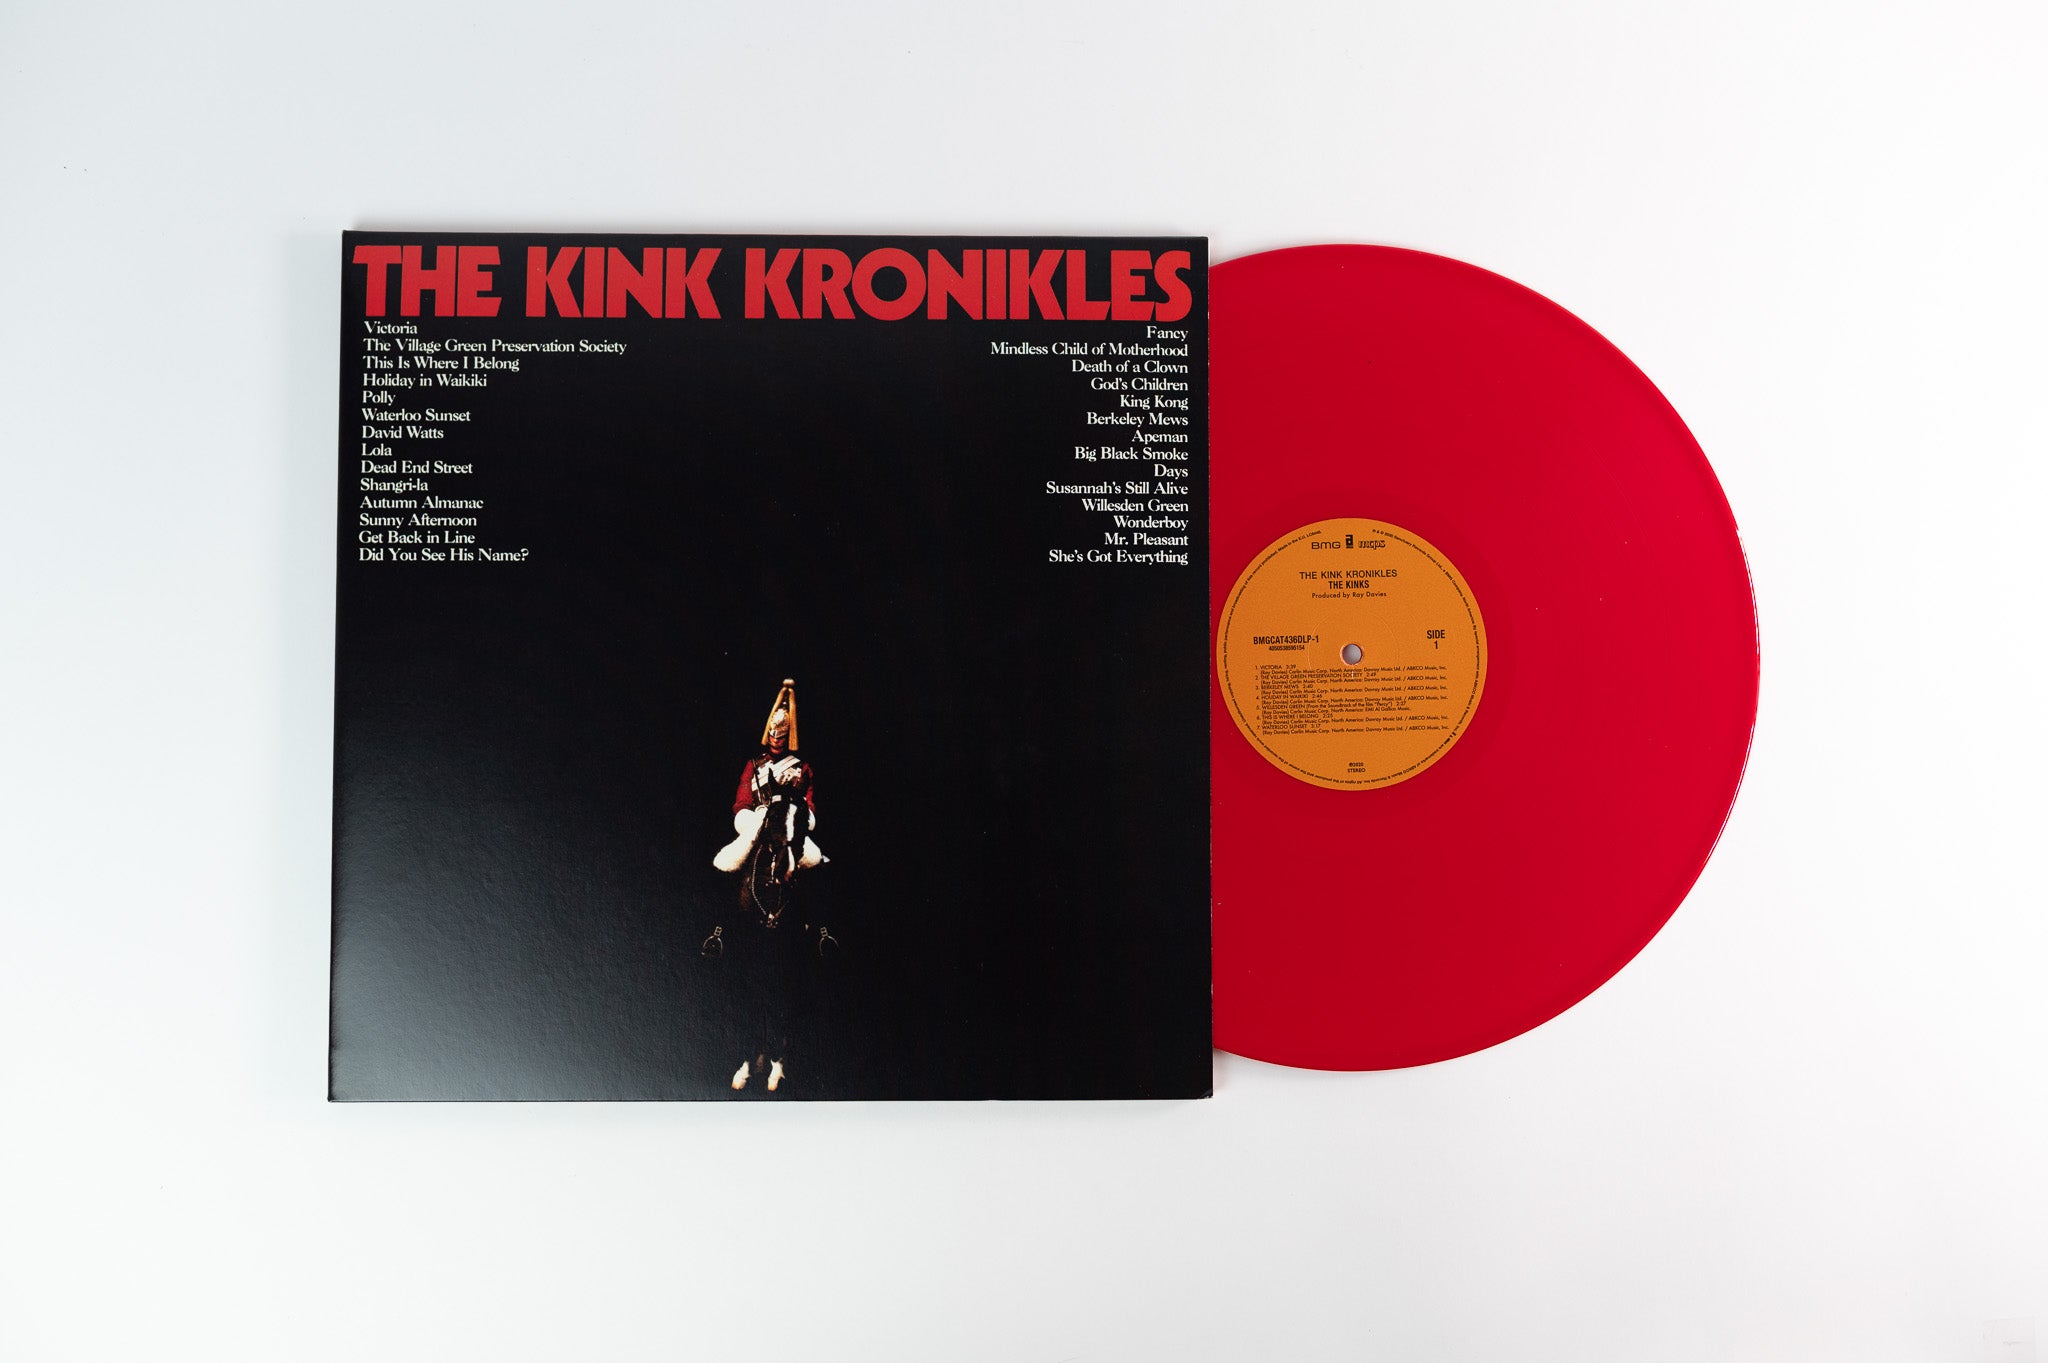 The Kinks - The Kink Kronikles on BMG ABKCO Ltd Red Vinyl Reissue